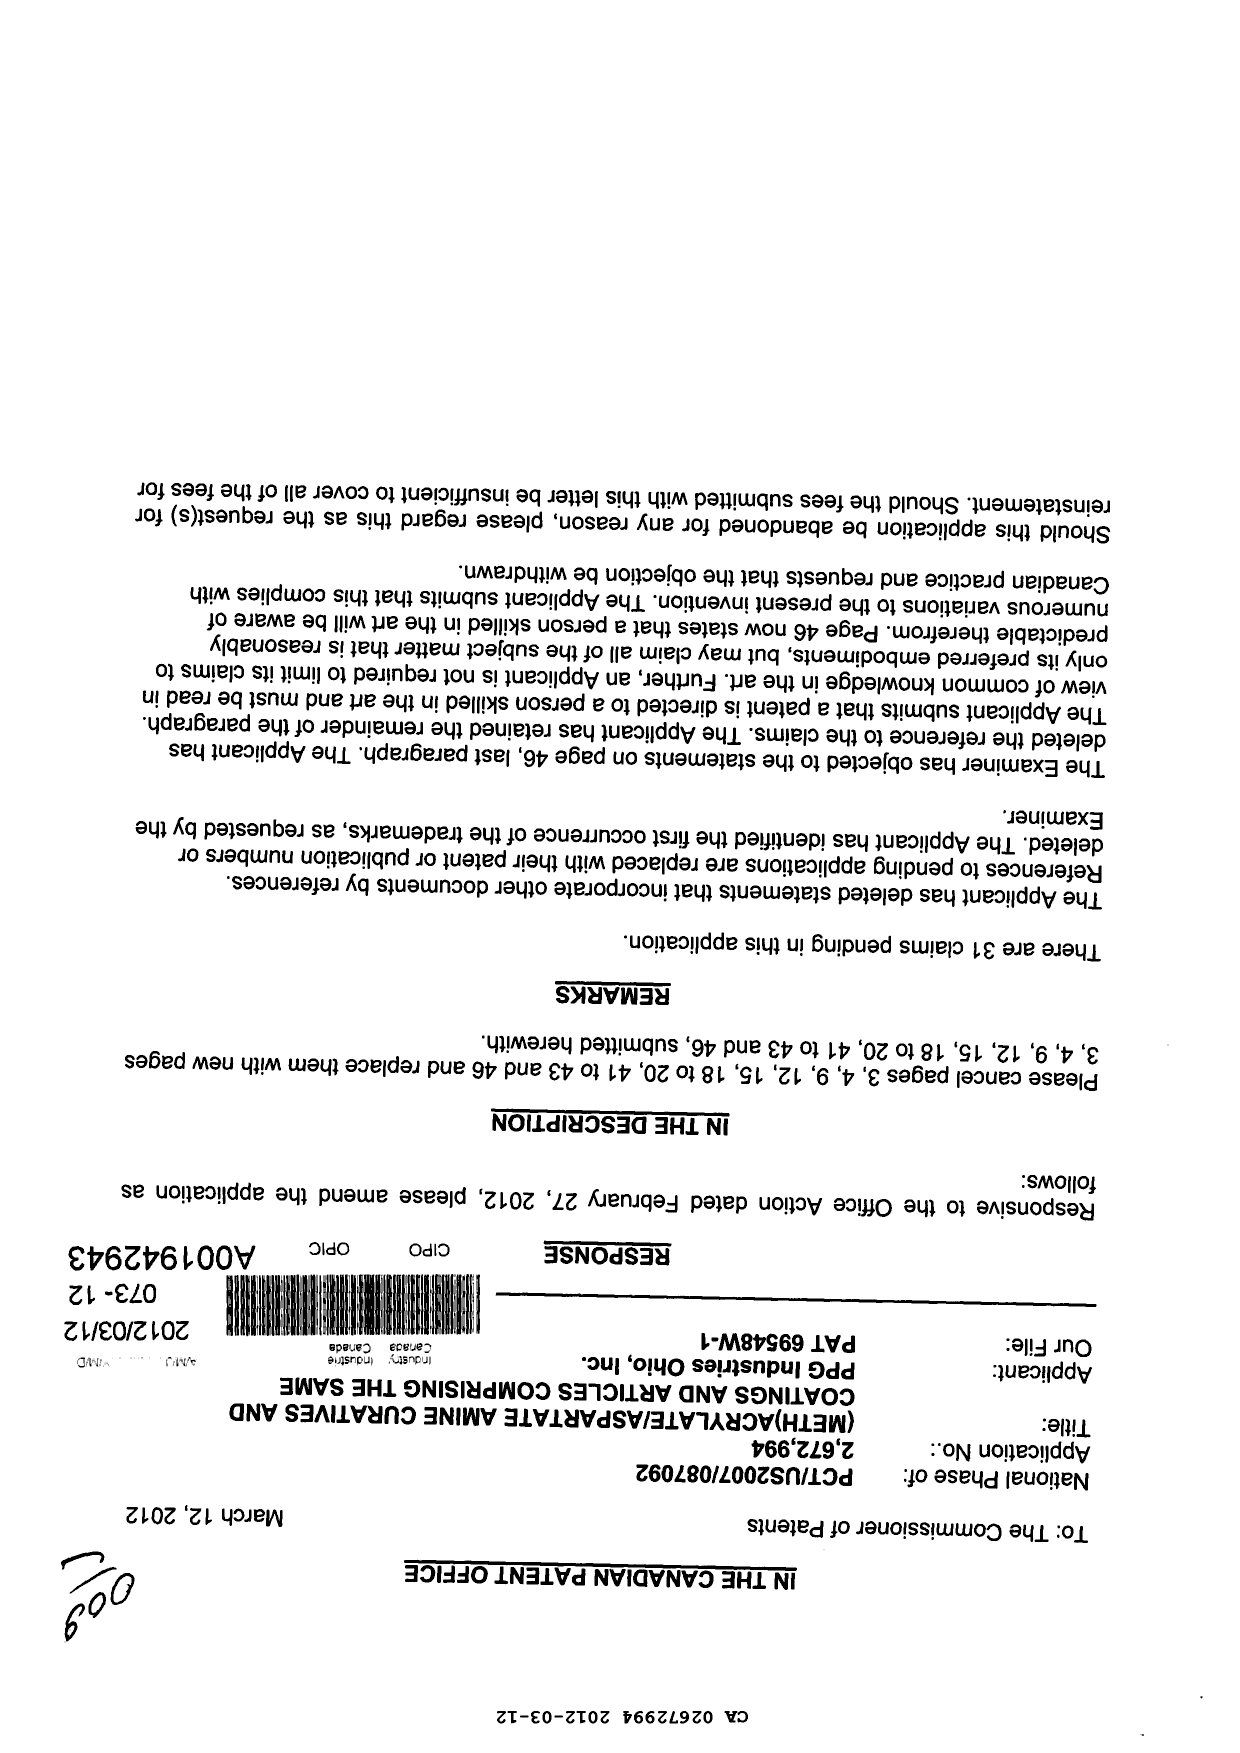 Canadian Patent Document 2672994. Prosecution-Amendment 20120312. Image 1 of 14